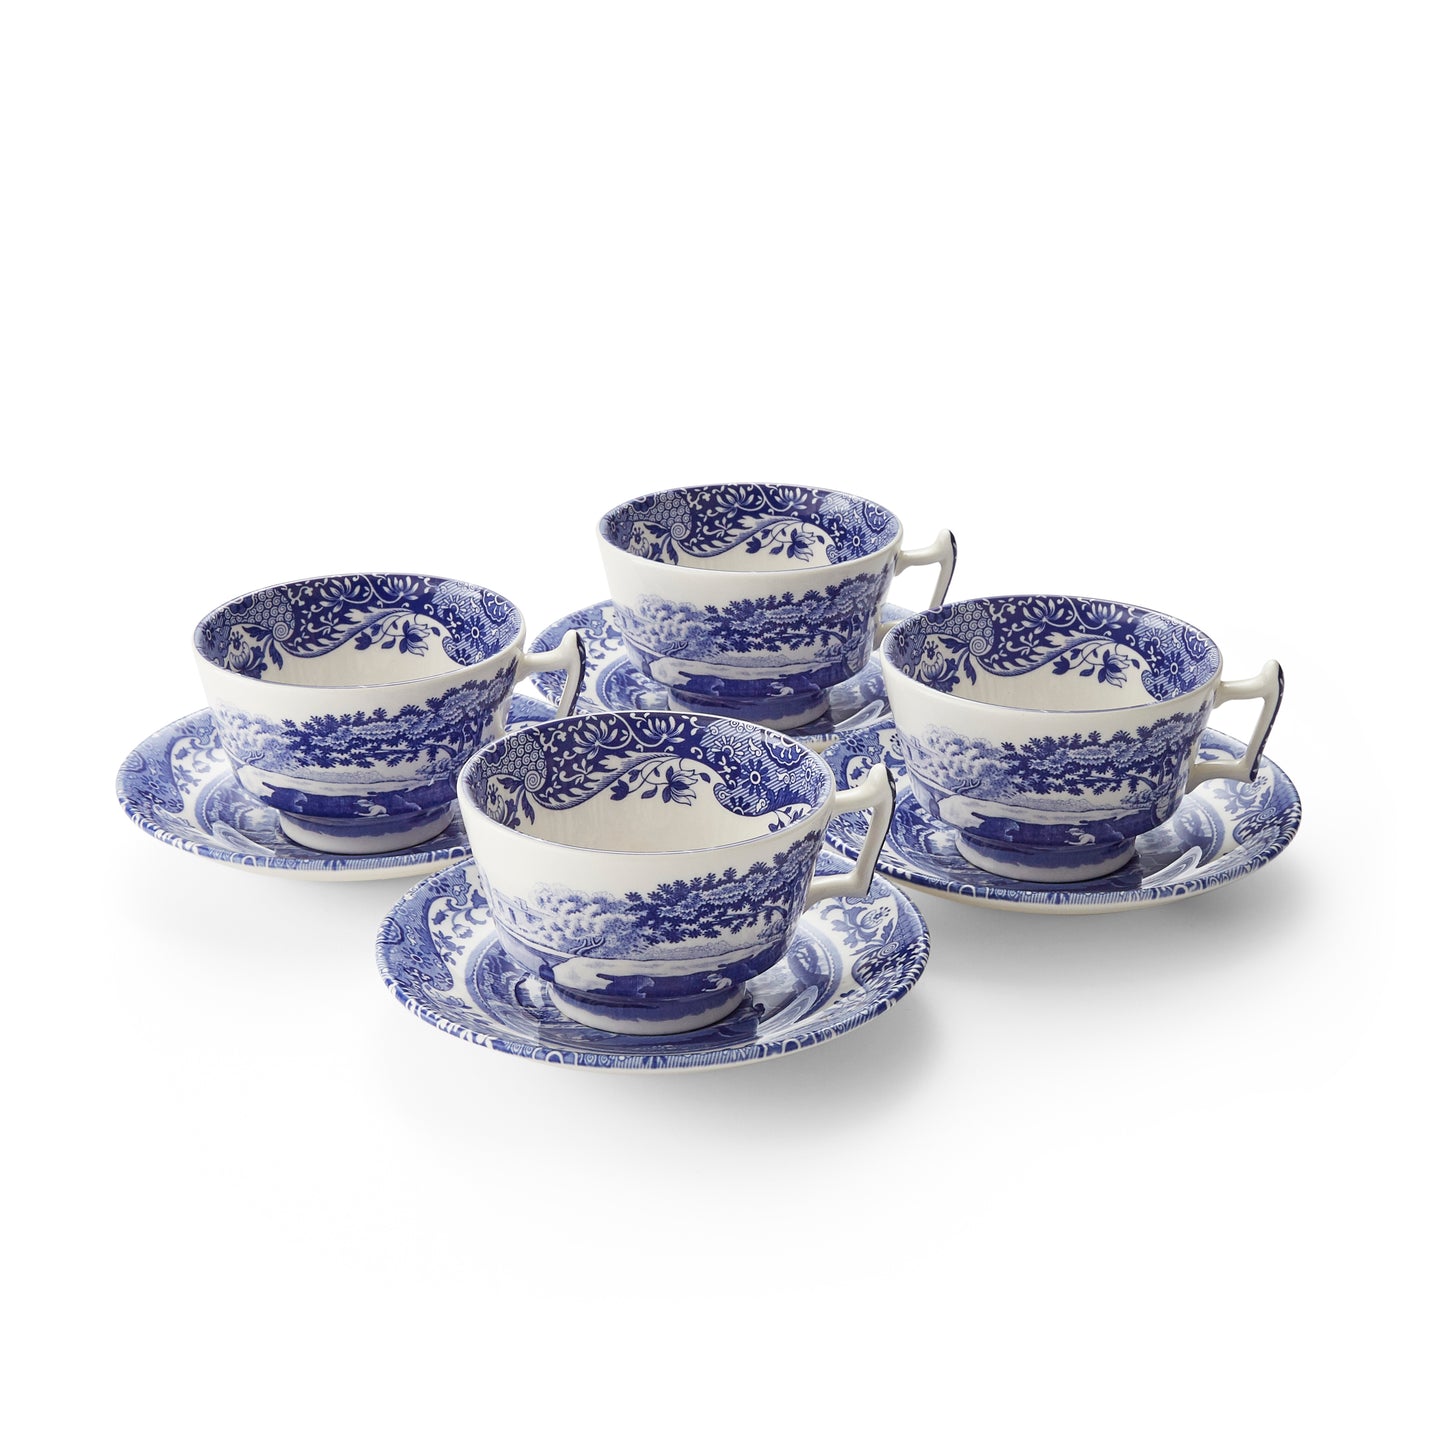 Spode Blue Italian Teacups and Saucers Set of 4